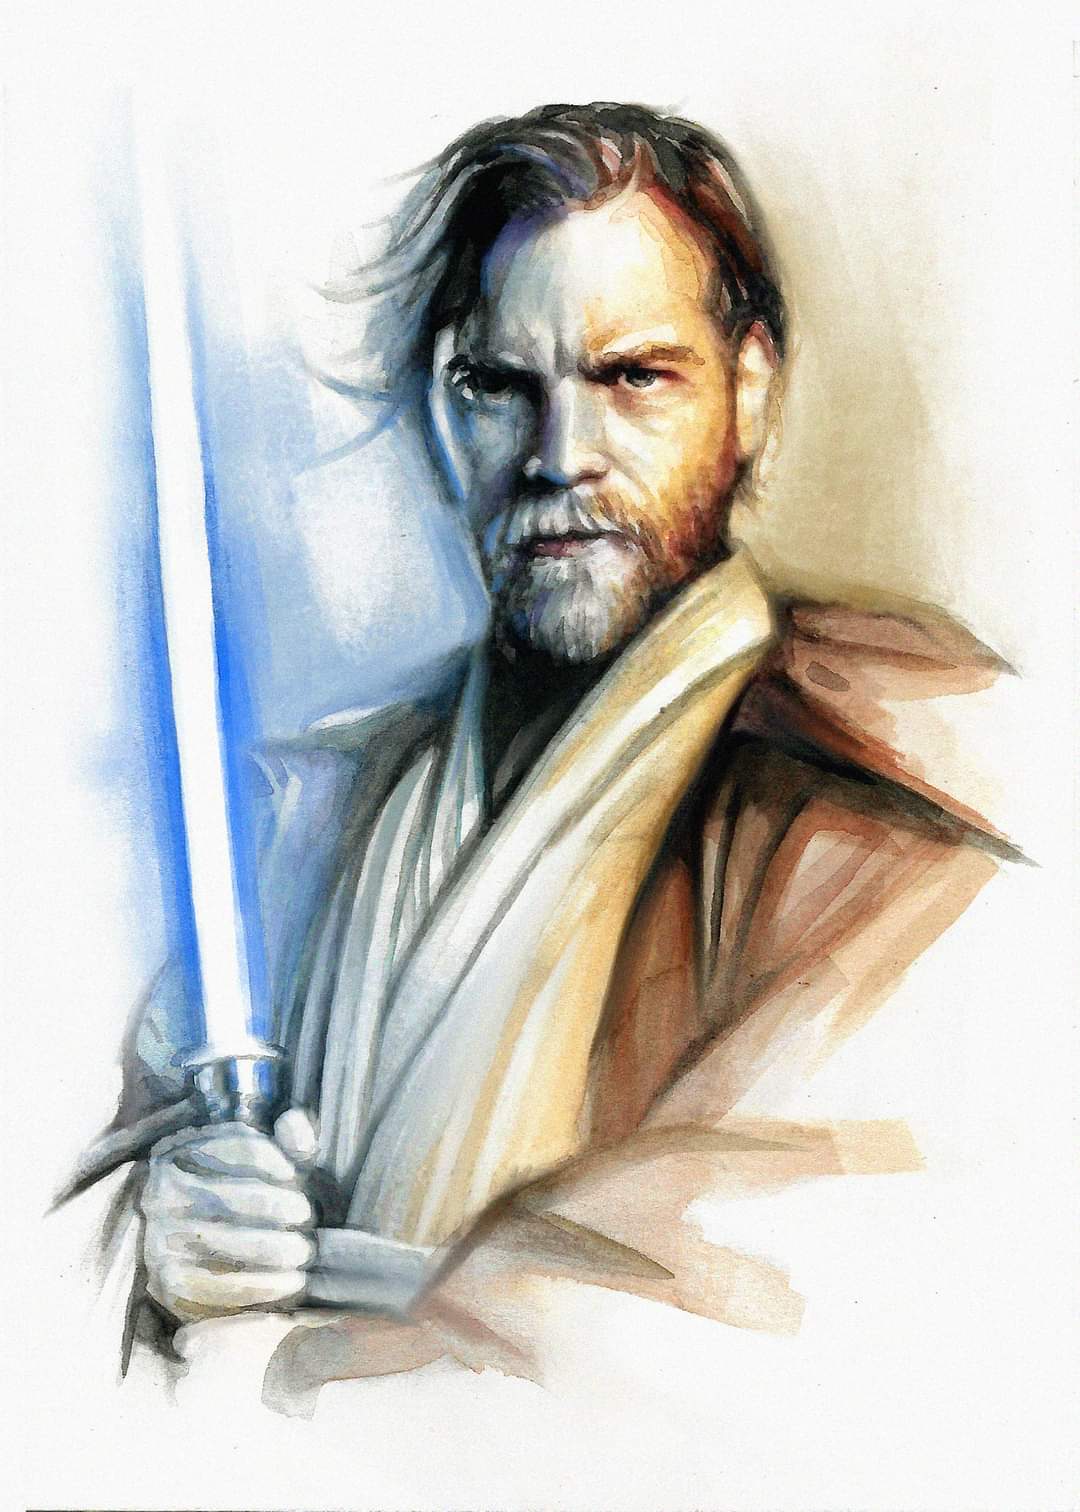 Image of Obi-Wan Kenobi